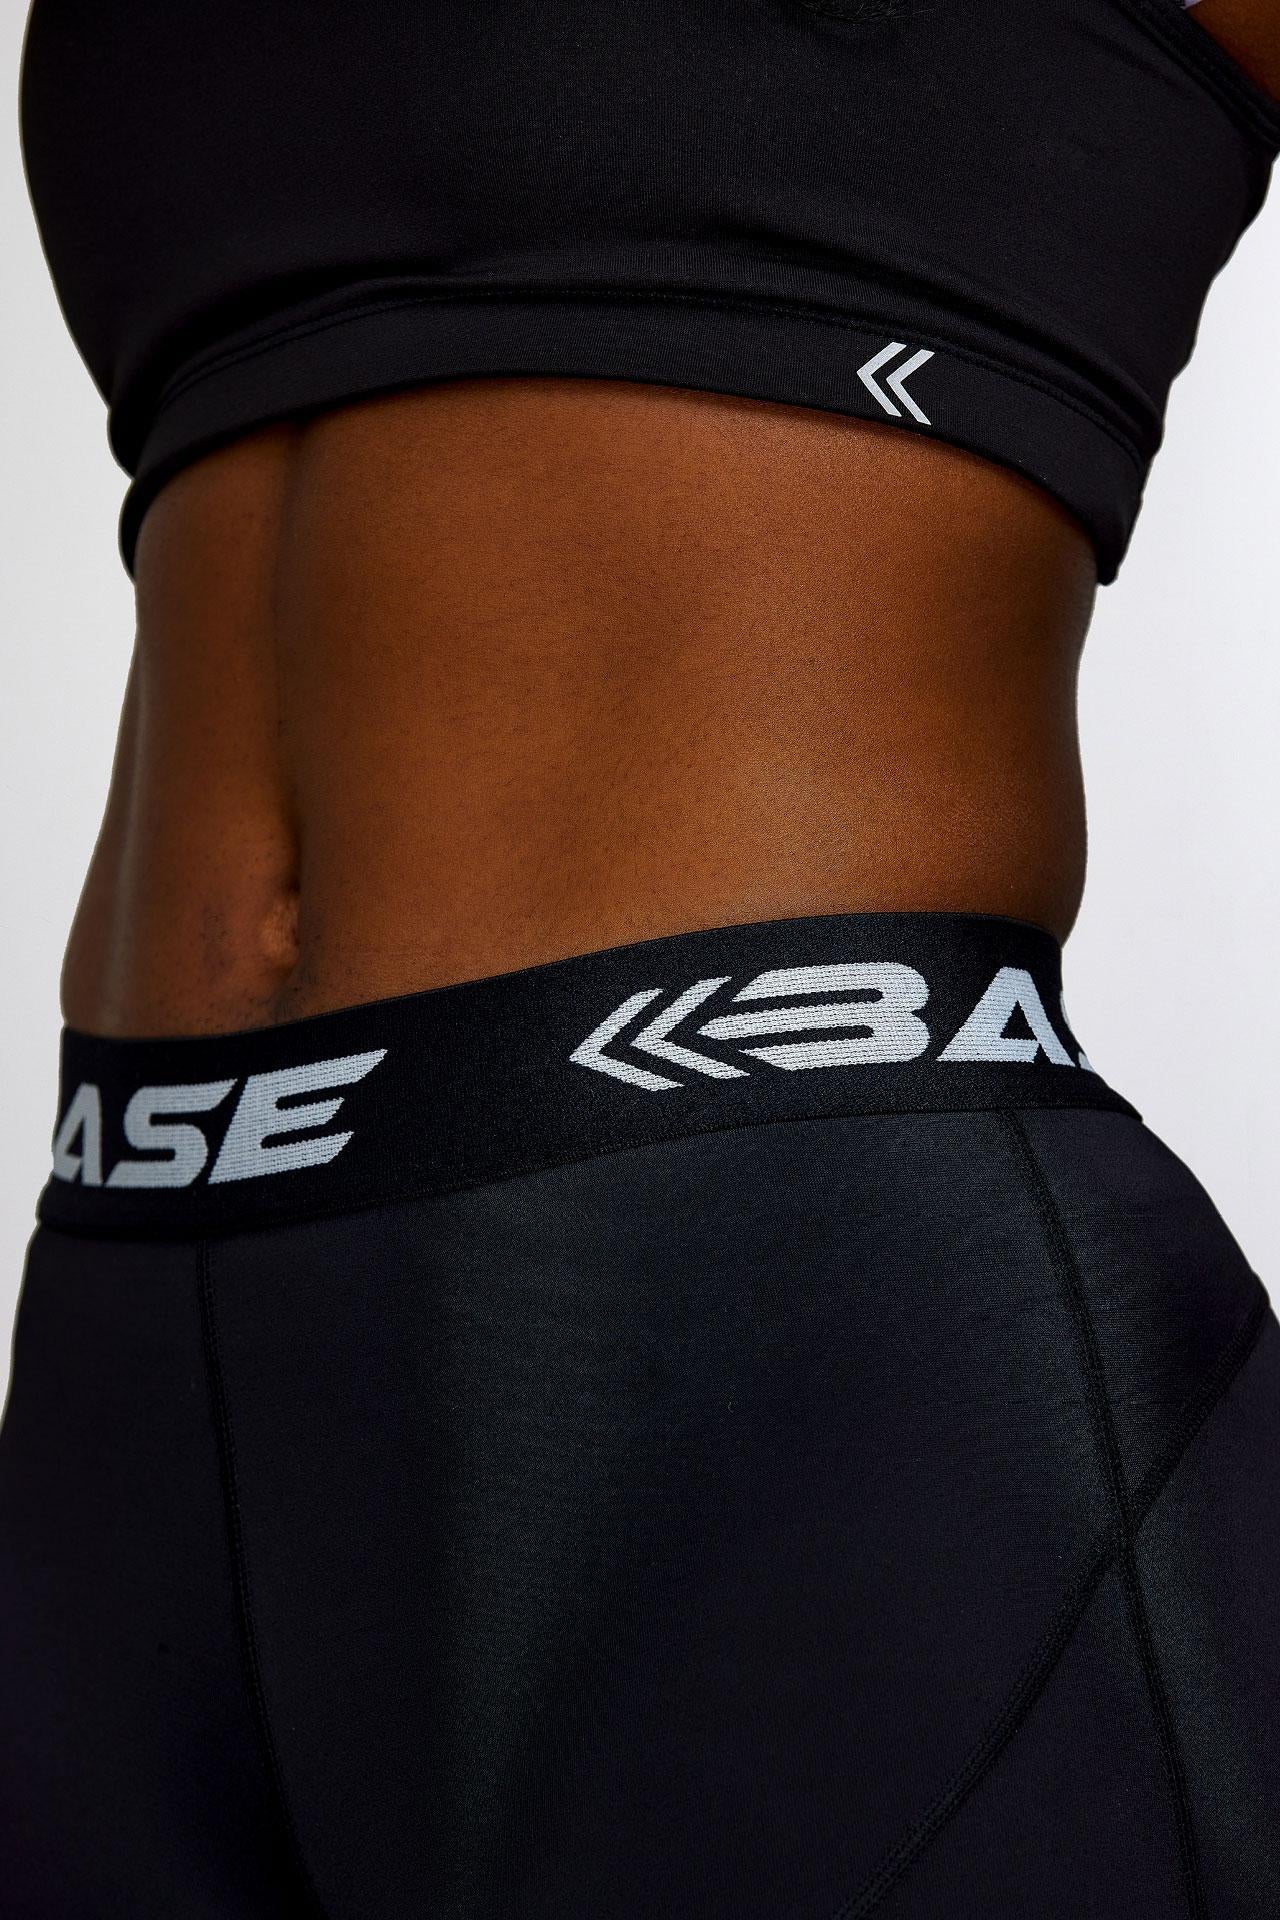 BASE Women's 3" Compression Shorts - Black - Adelaide 36ers